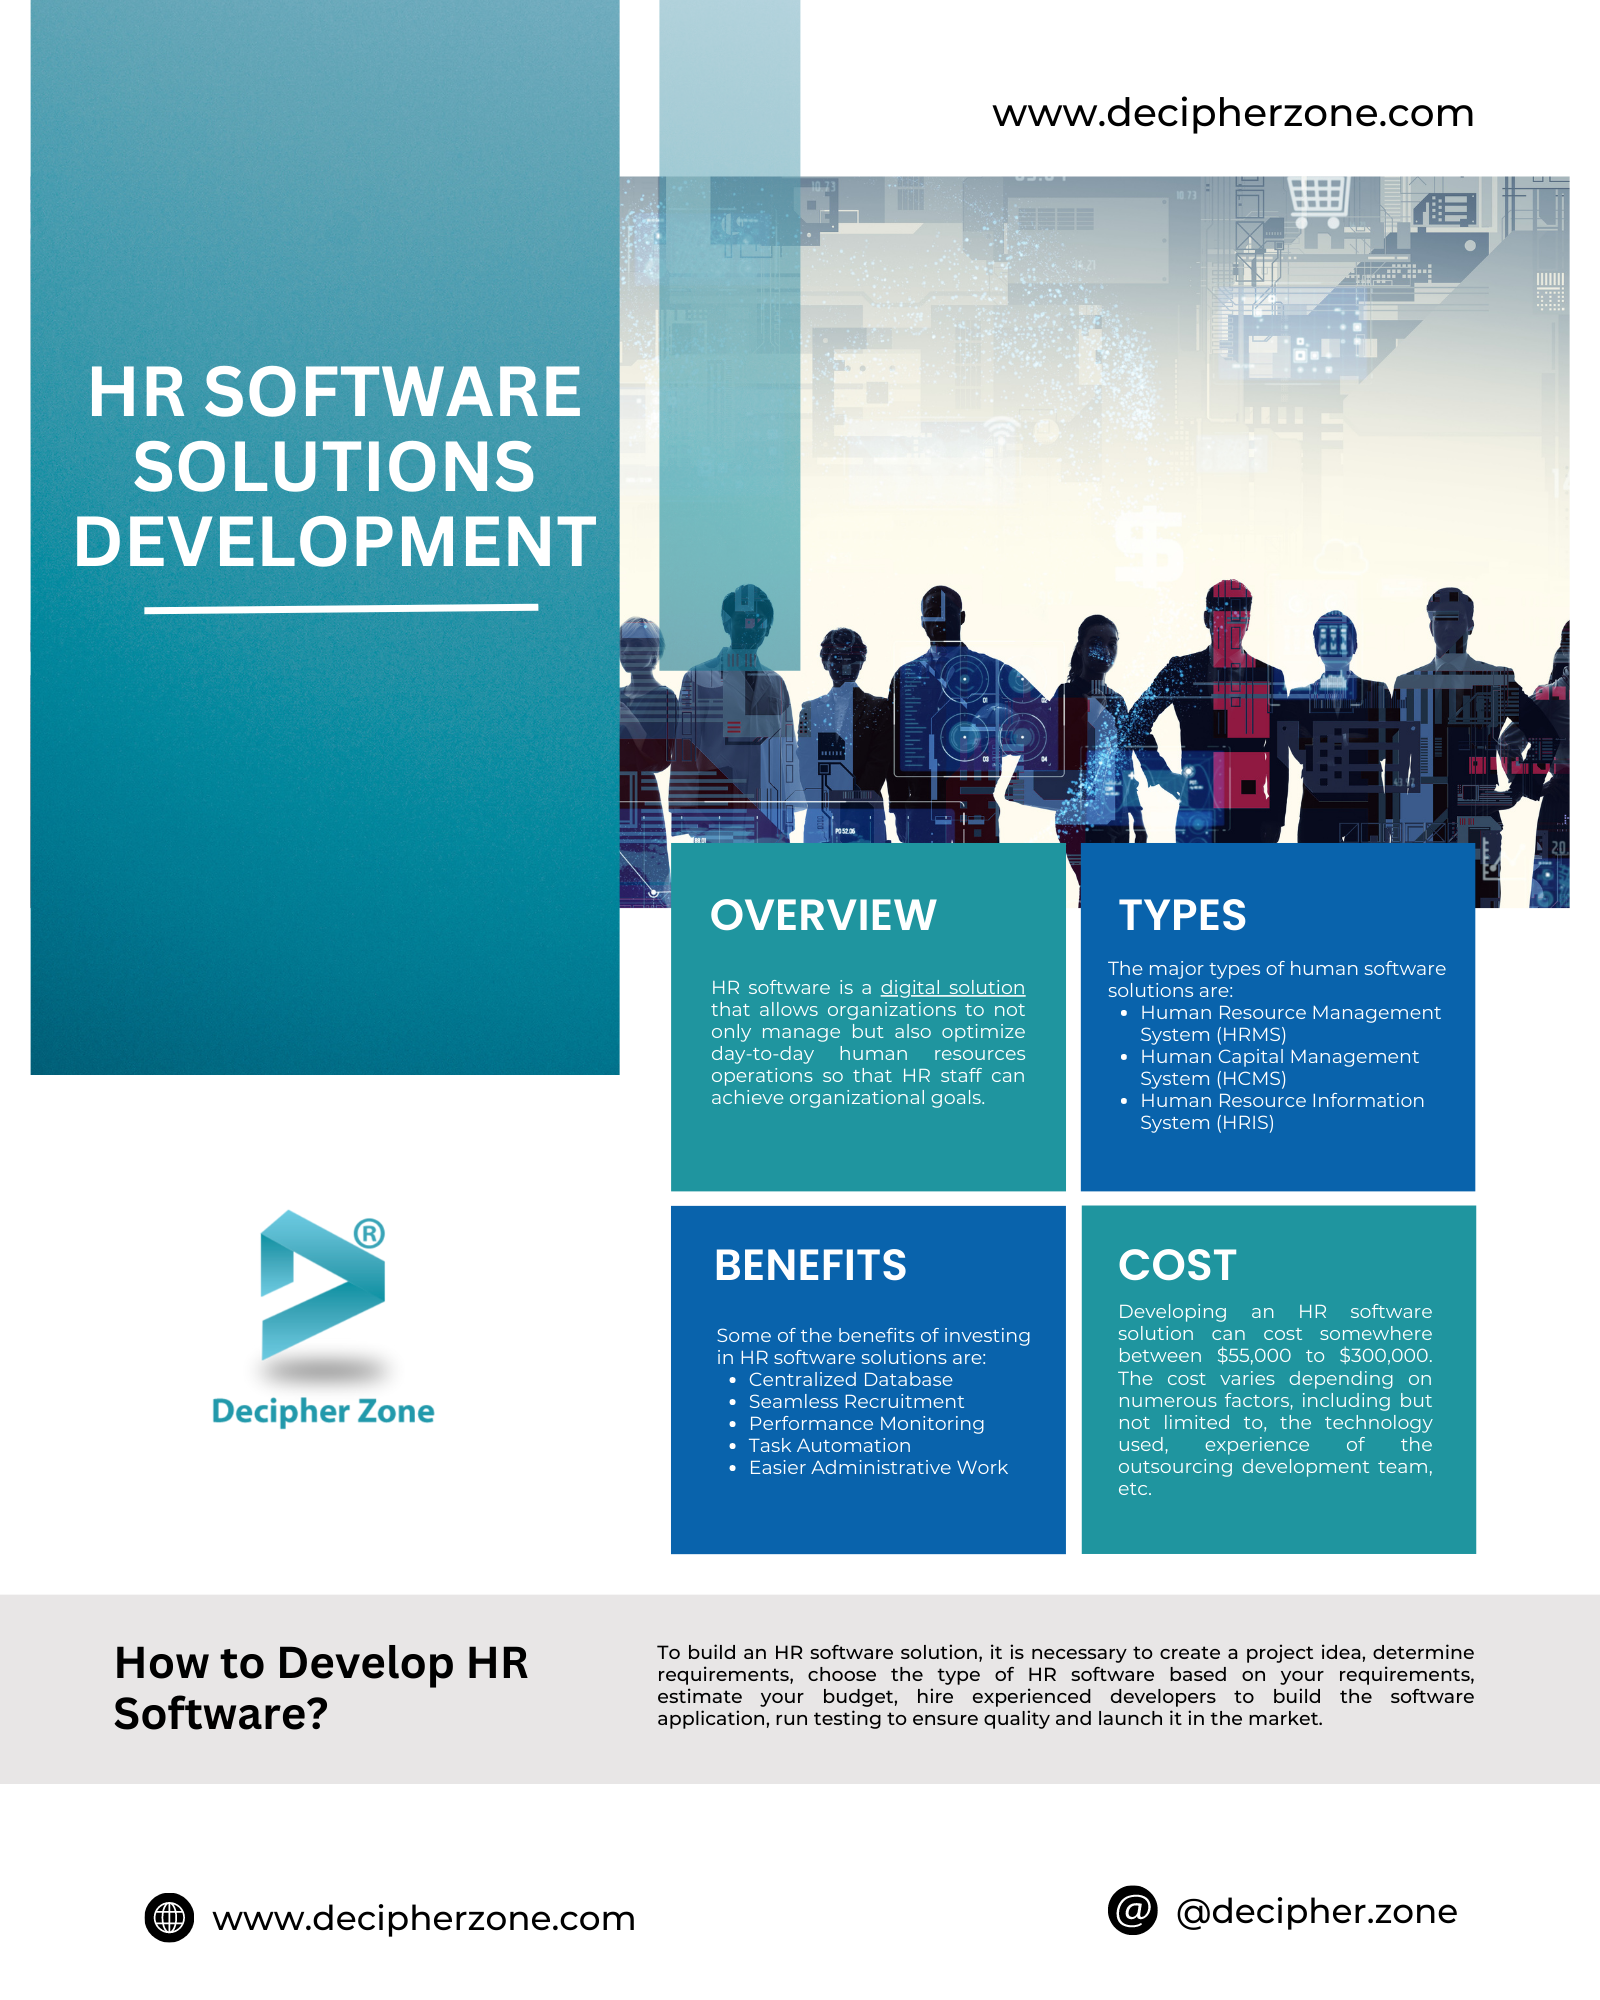 HR Software Solutions Development